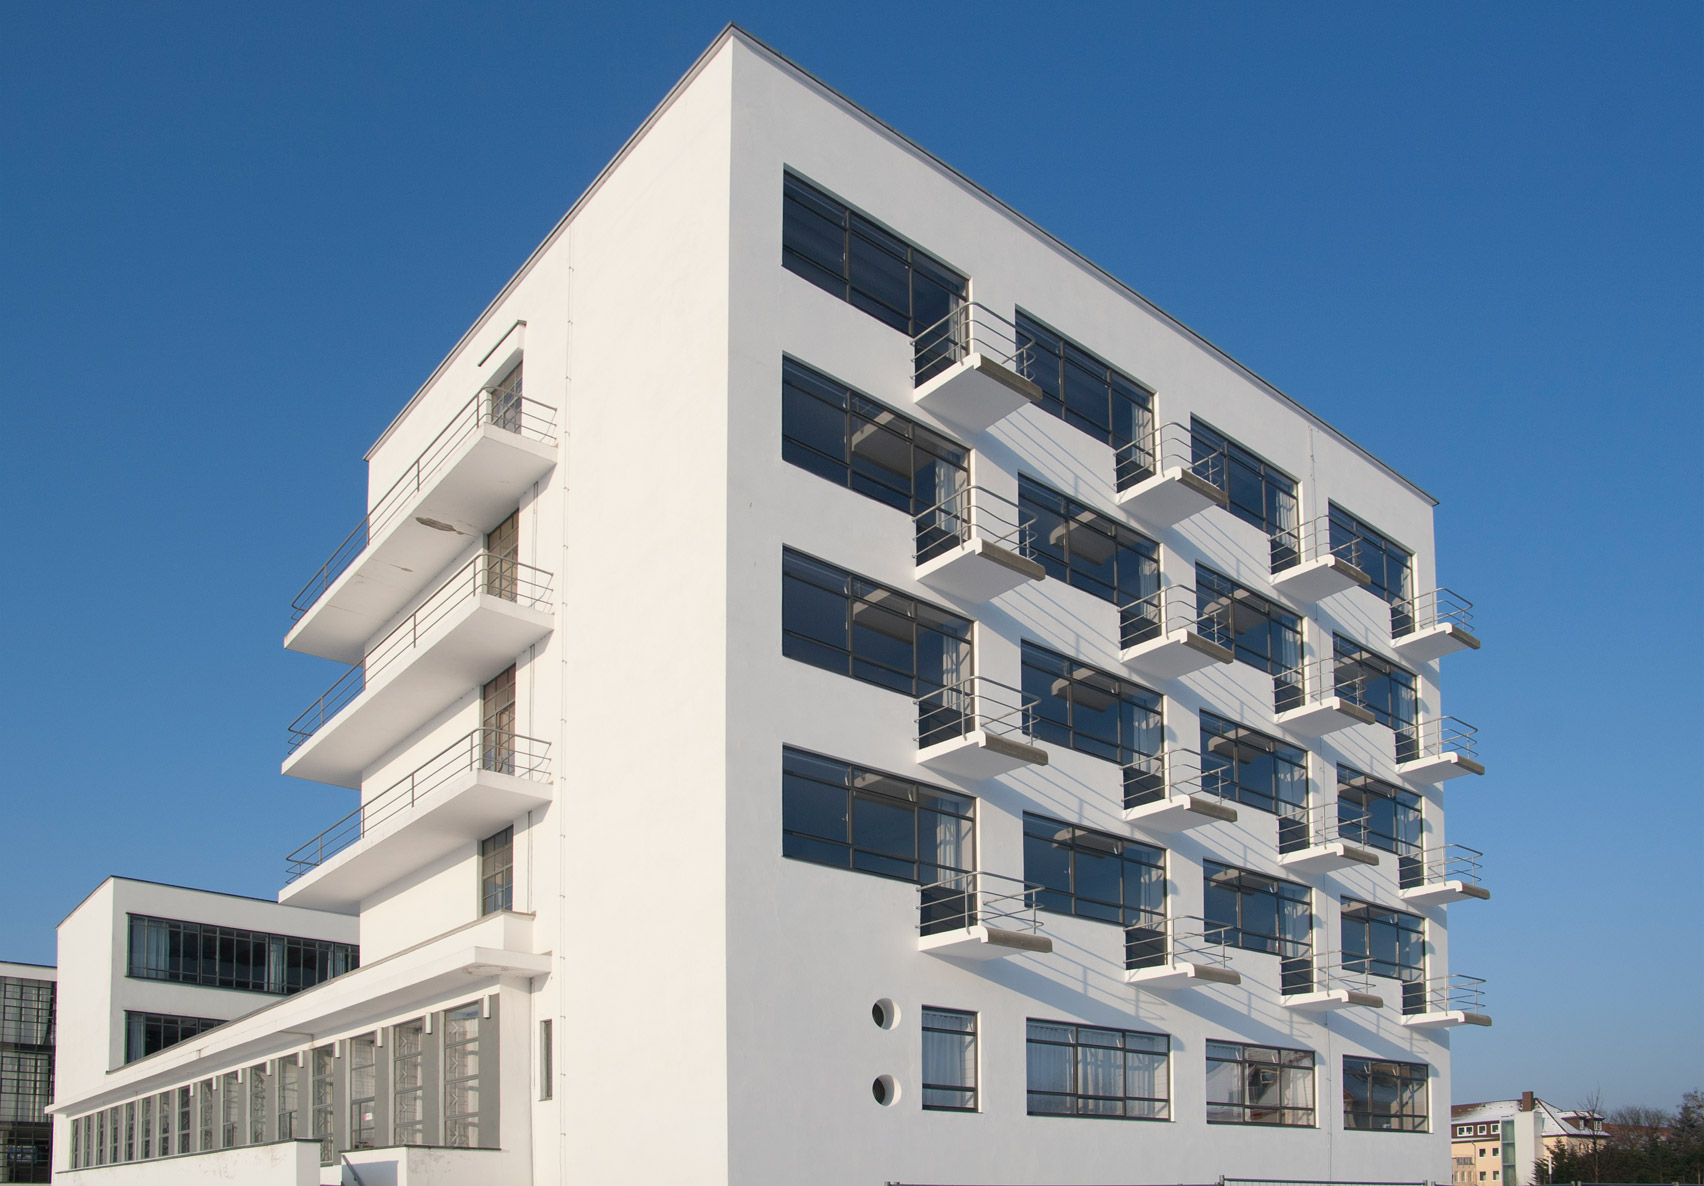 Win a stay at Bauhaus Dessau